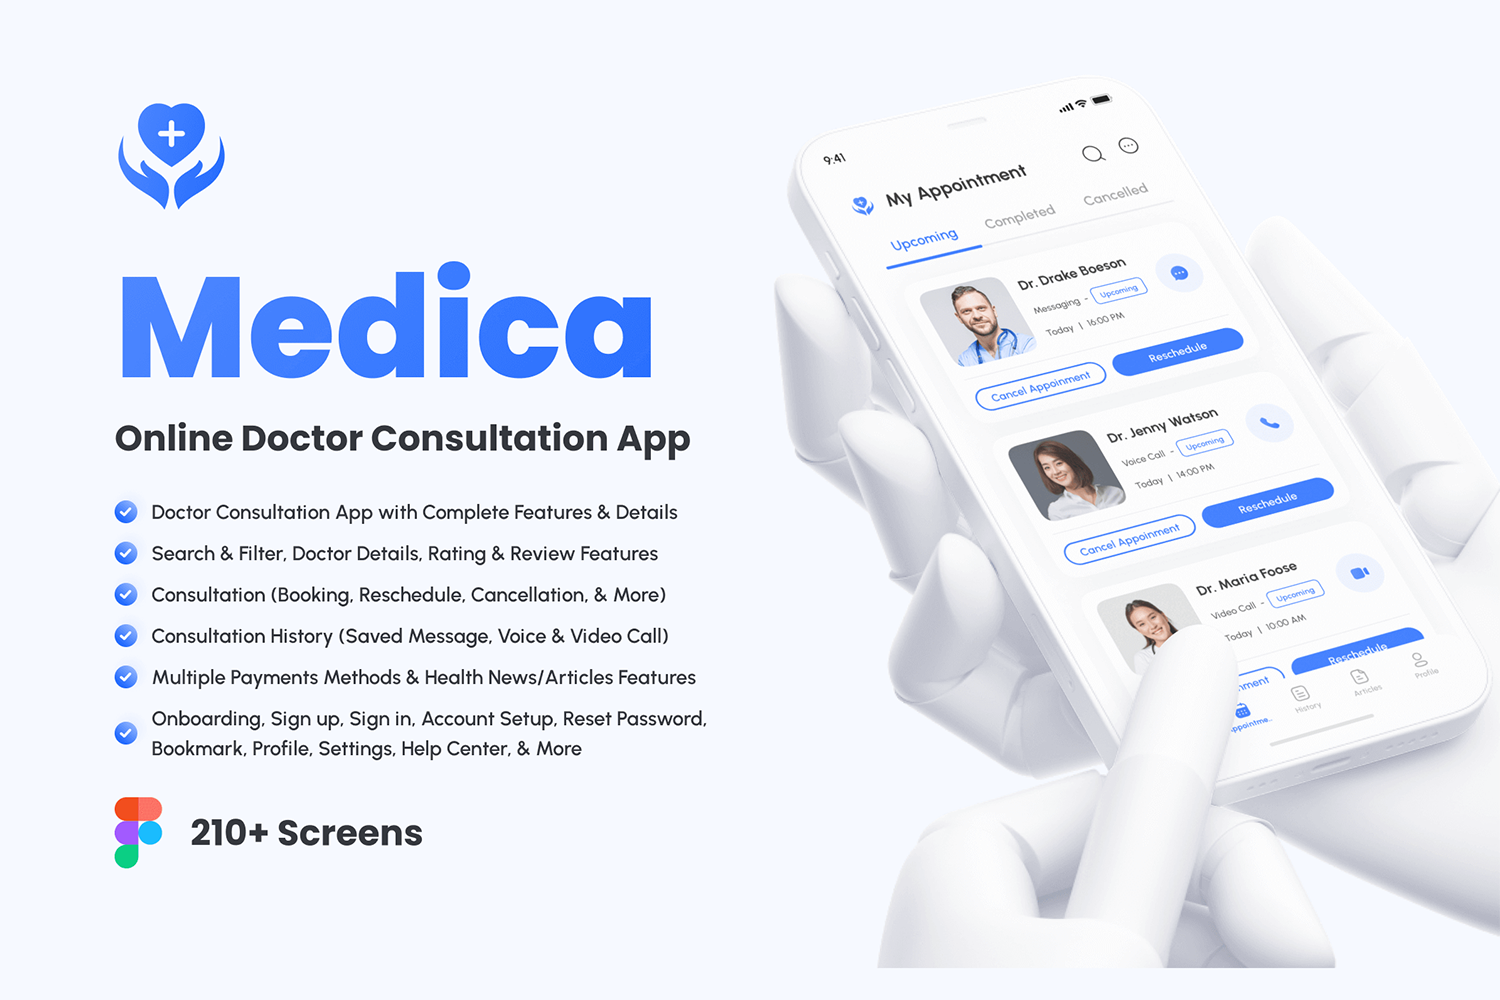 4594 210屏国外在线医生医疗健康咨询用户界面app设计UI套件明暗Fig模板 Medica – Online Doctor Consultation App UI Kit@GOOODME.COM